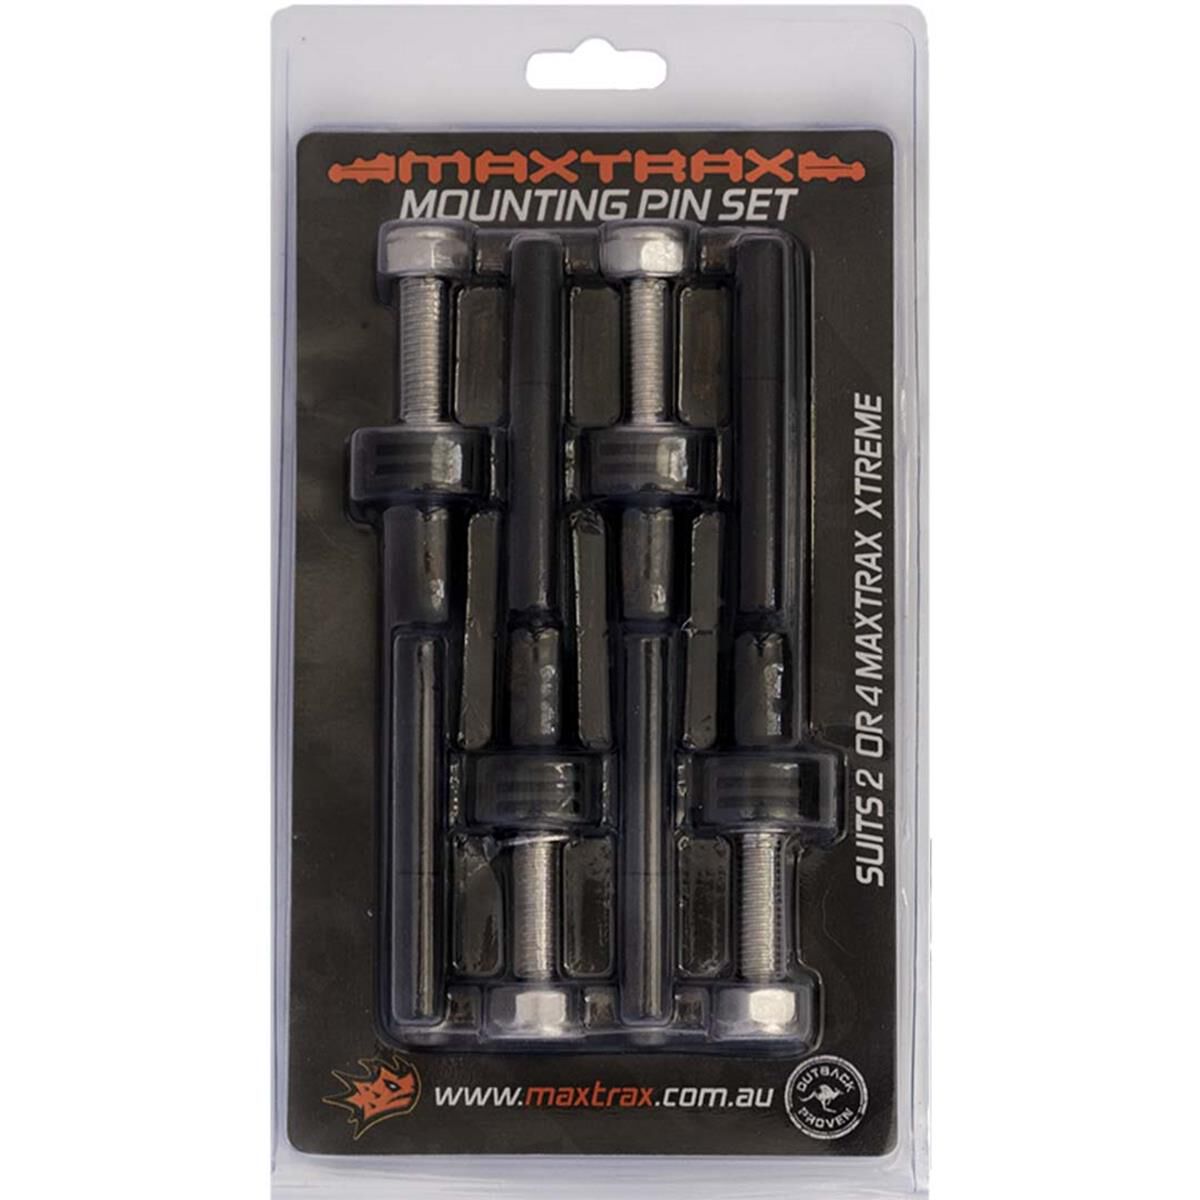 Maxtrax Mounting Pin Set X-Series (40mm) - MTXXMPS | Supercheap Auto